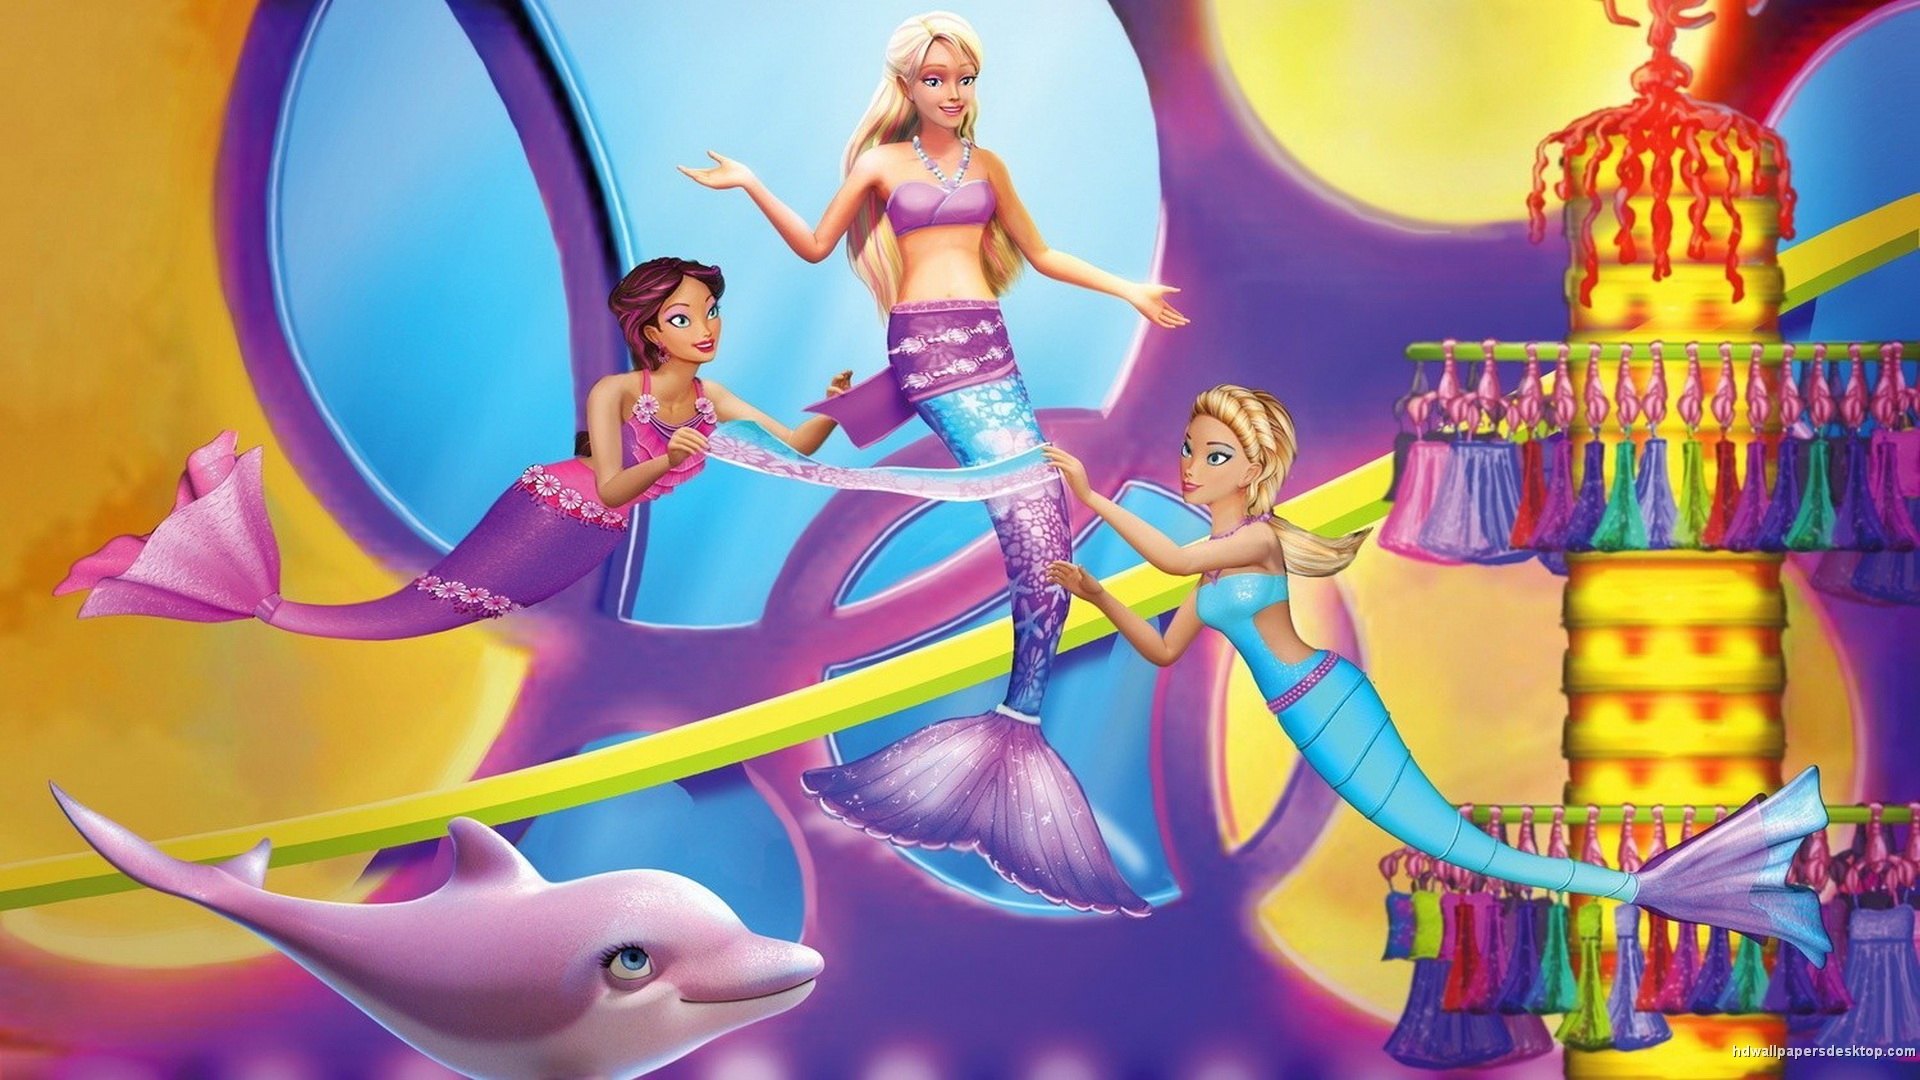 Barbie In A Mermaid Tail - abcjkl